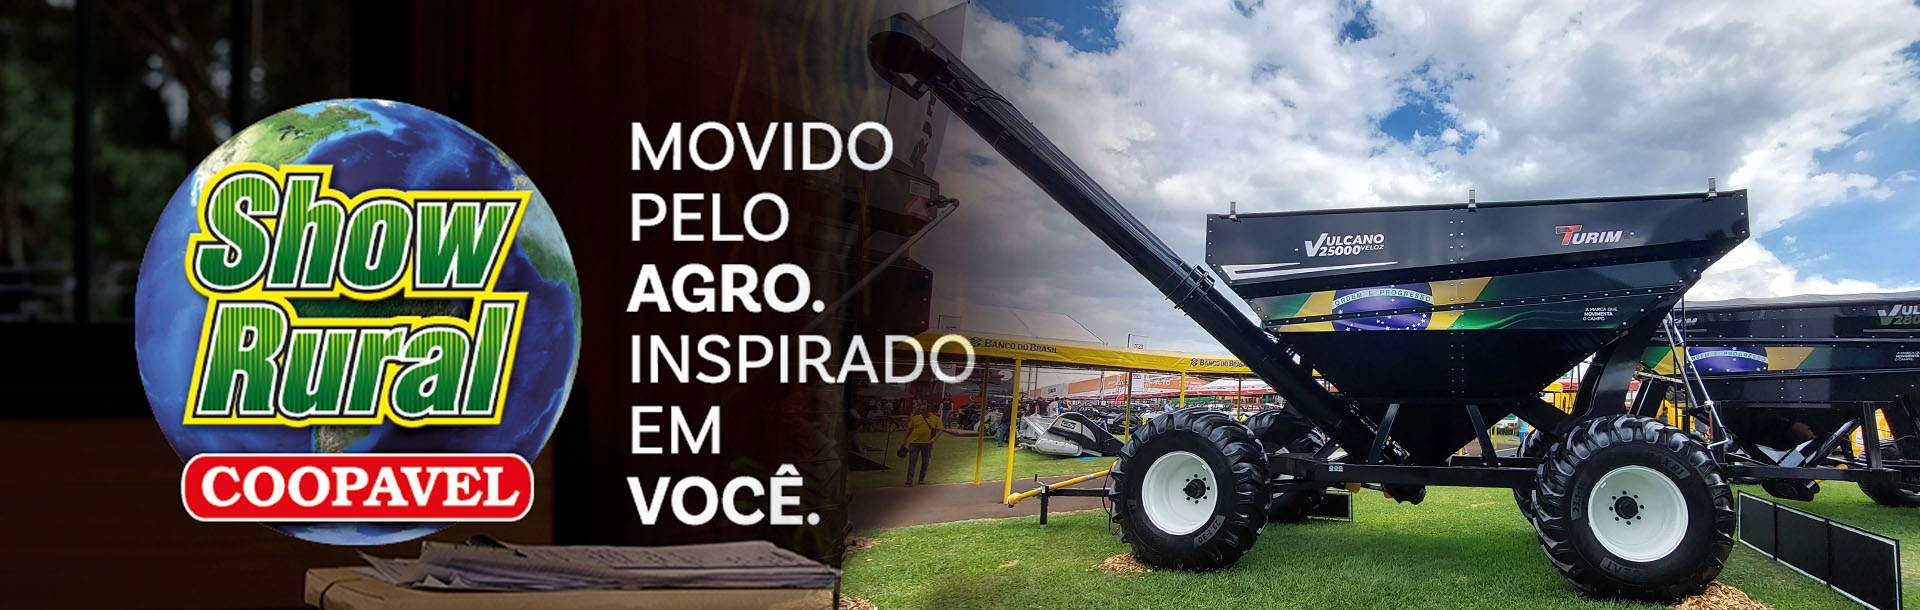 Sucesso de vendas no Brasil: Vulcano Veloz é destaque na Show Rural